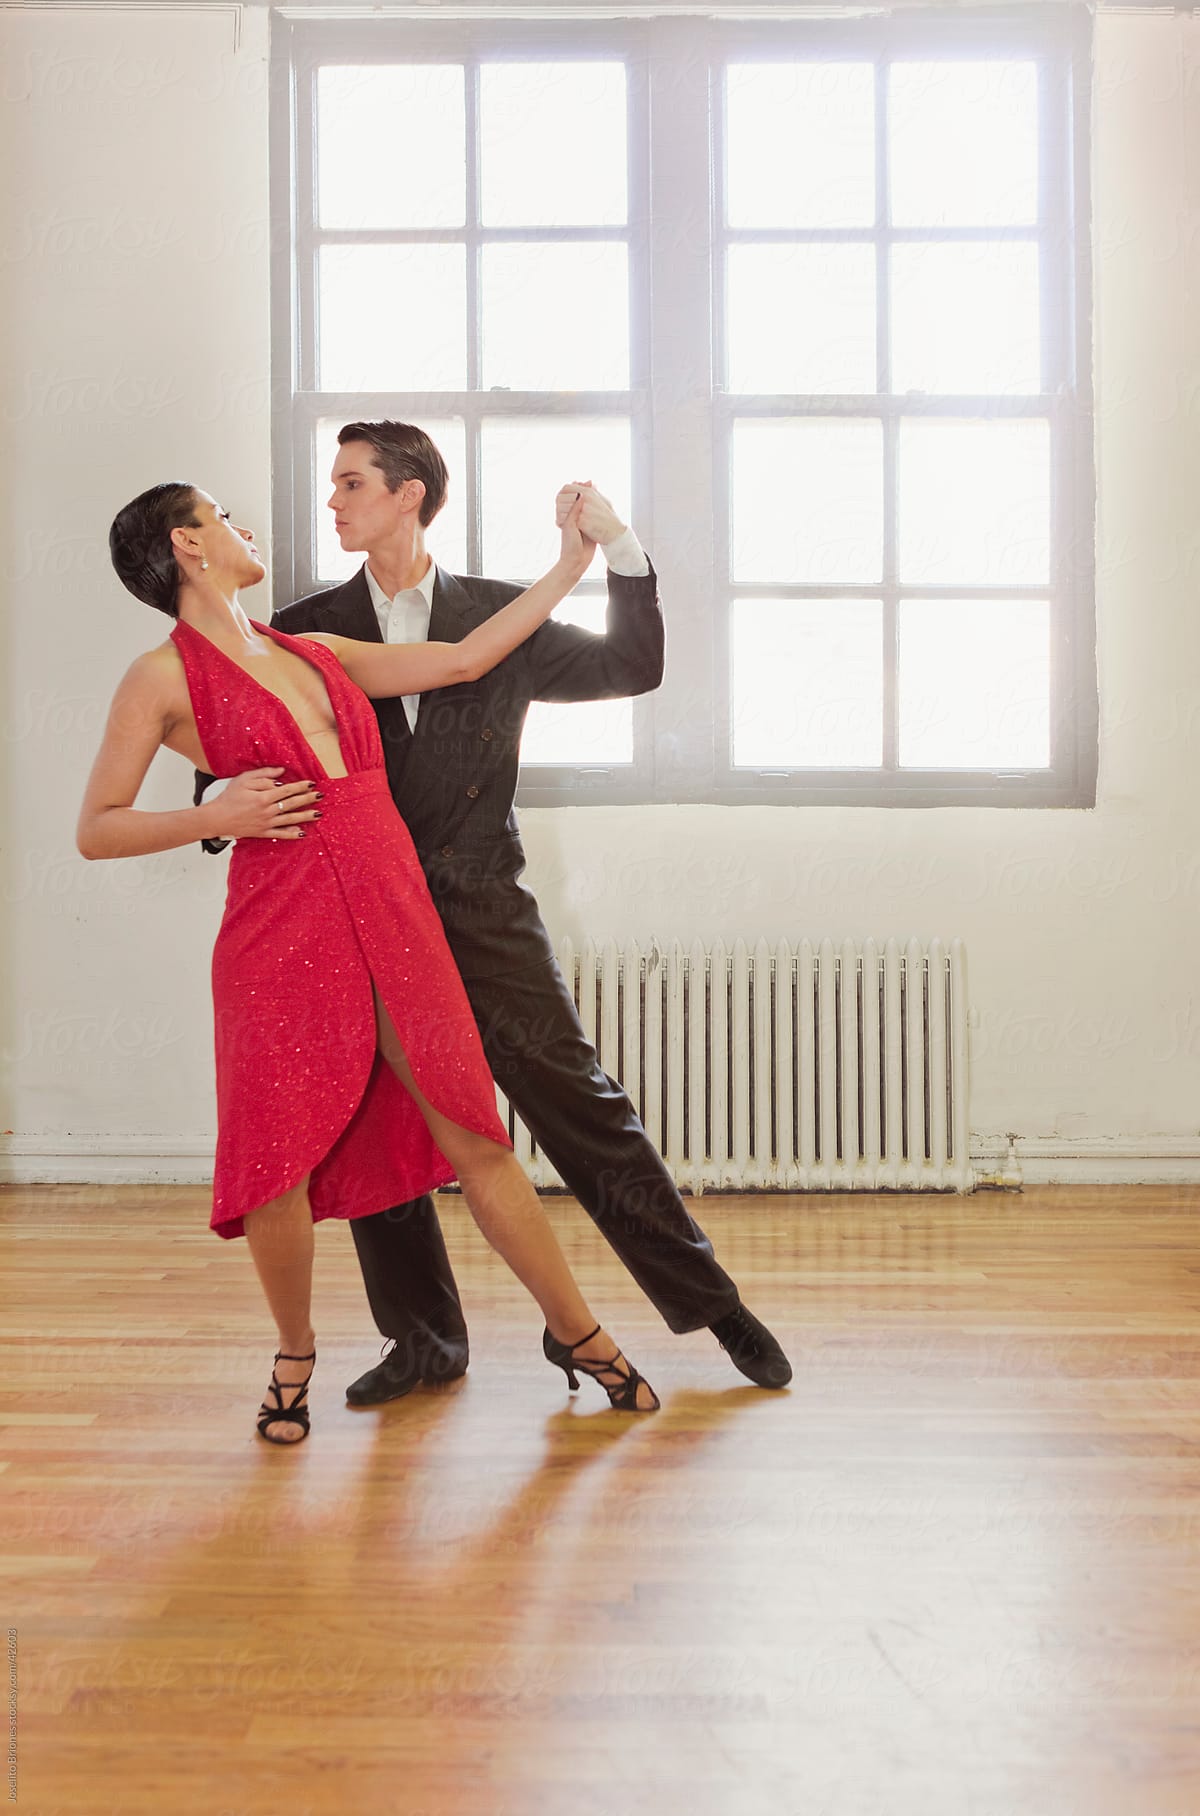 Ballroom Dancing Couple In Argentinian Tango By Joselito